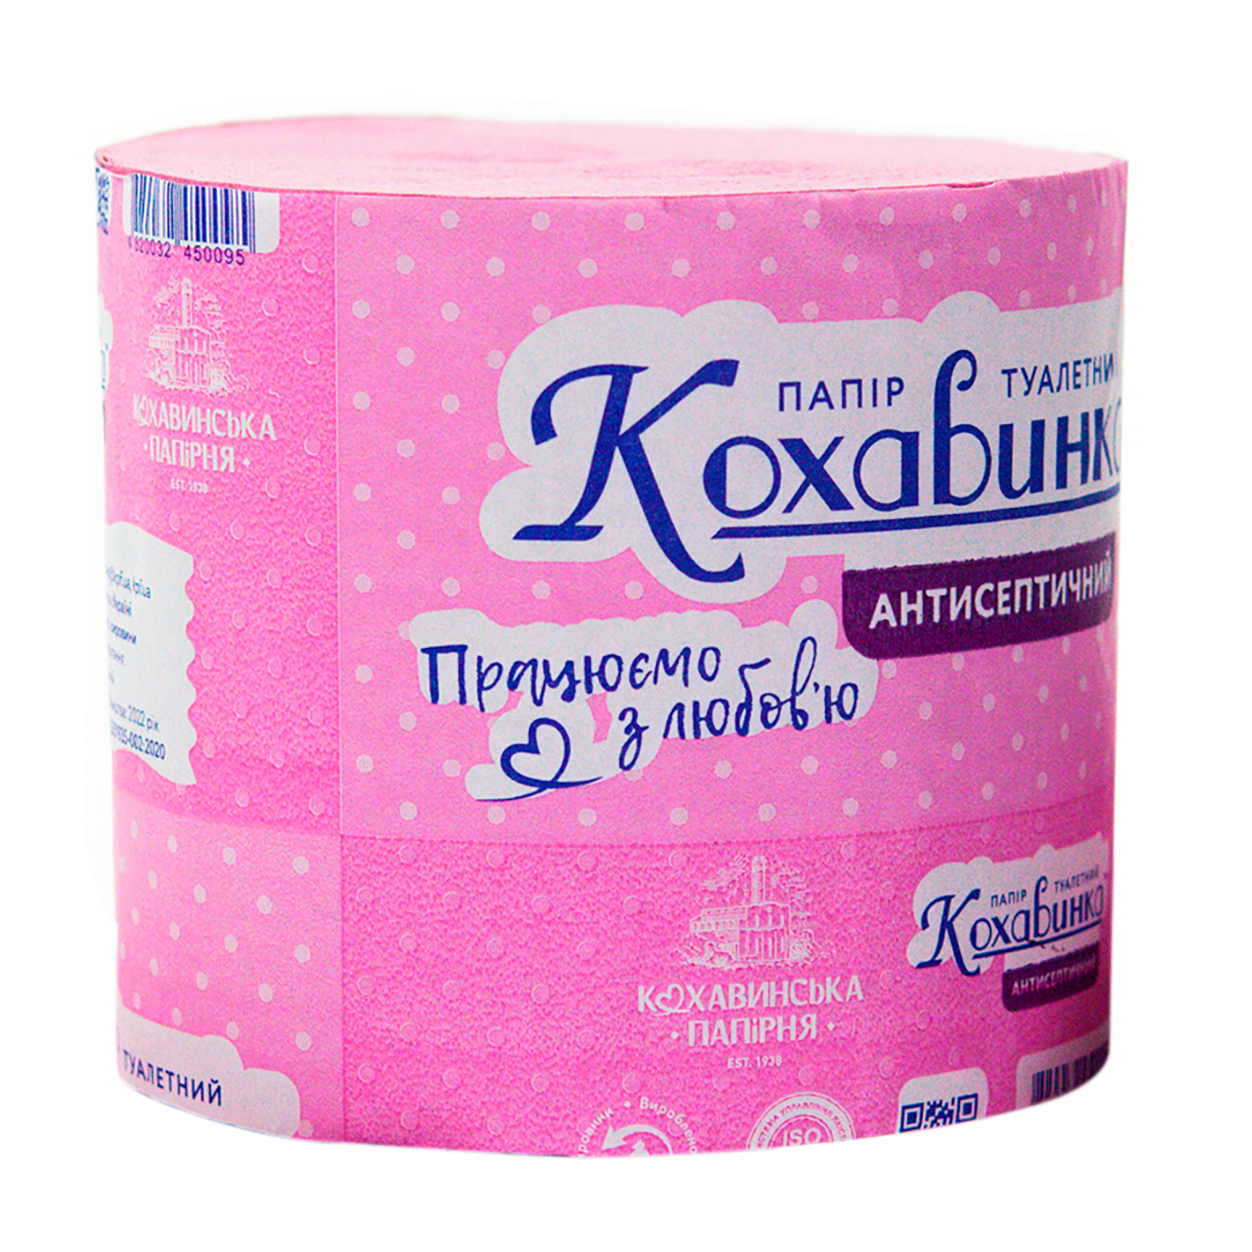 Kokhavynka anticeptic Toilet paper 8pcs
